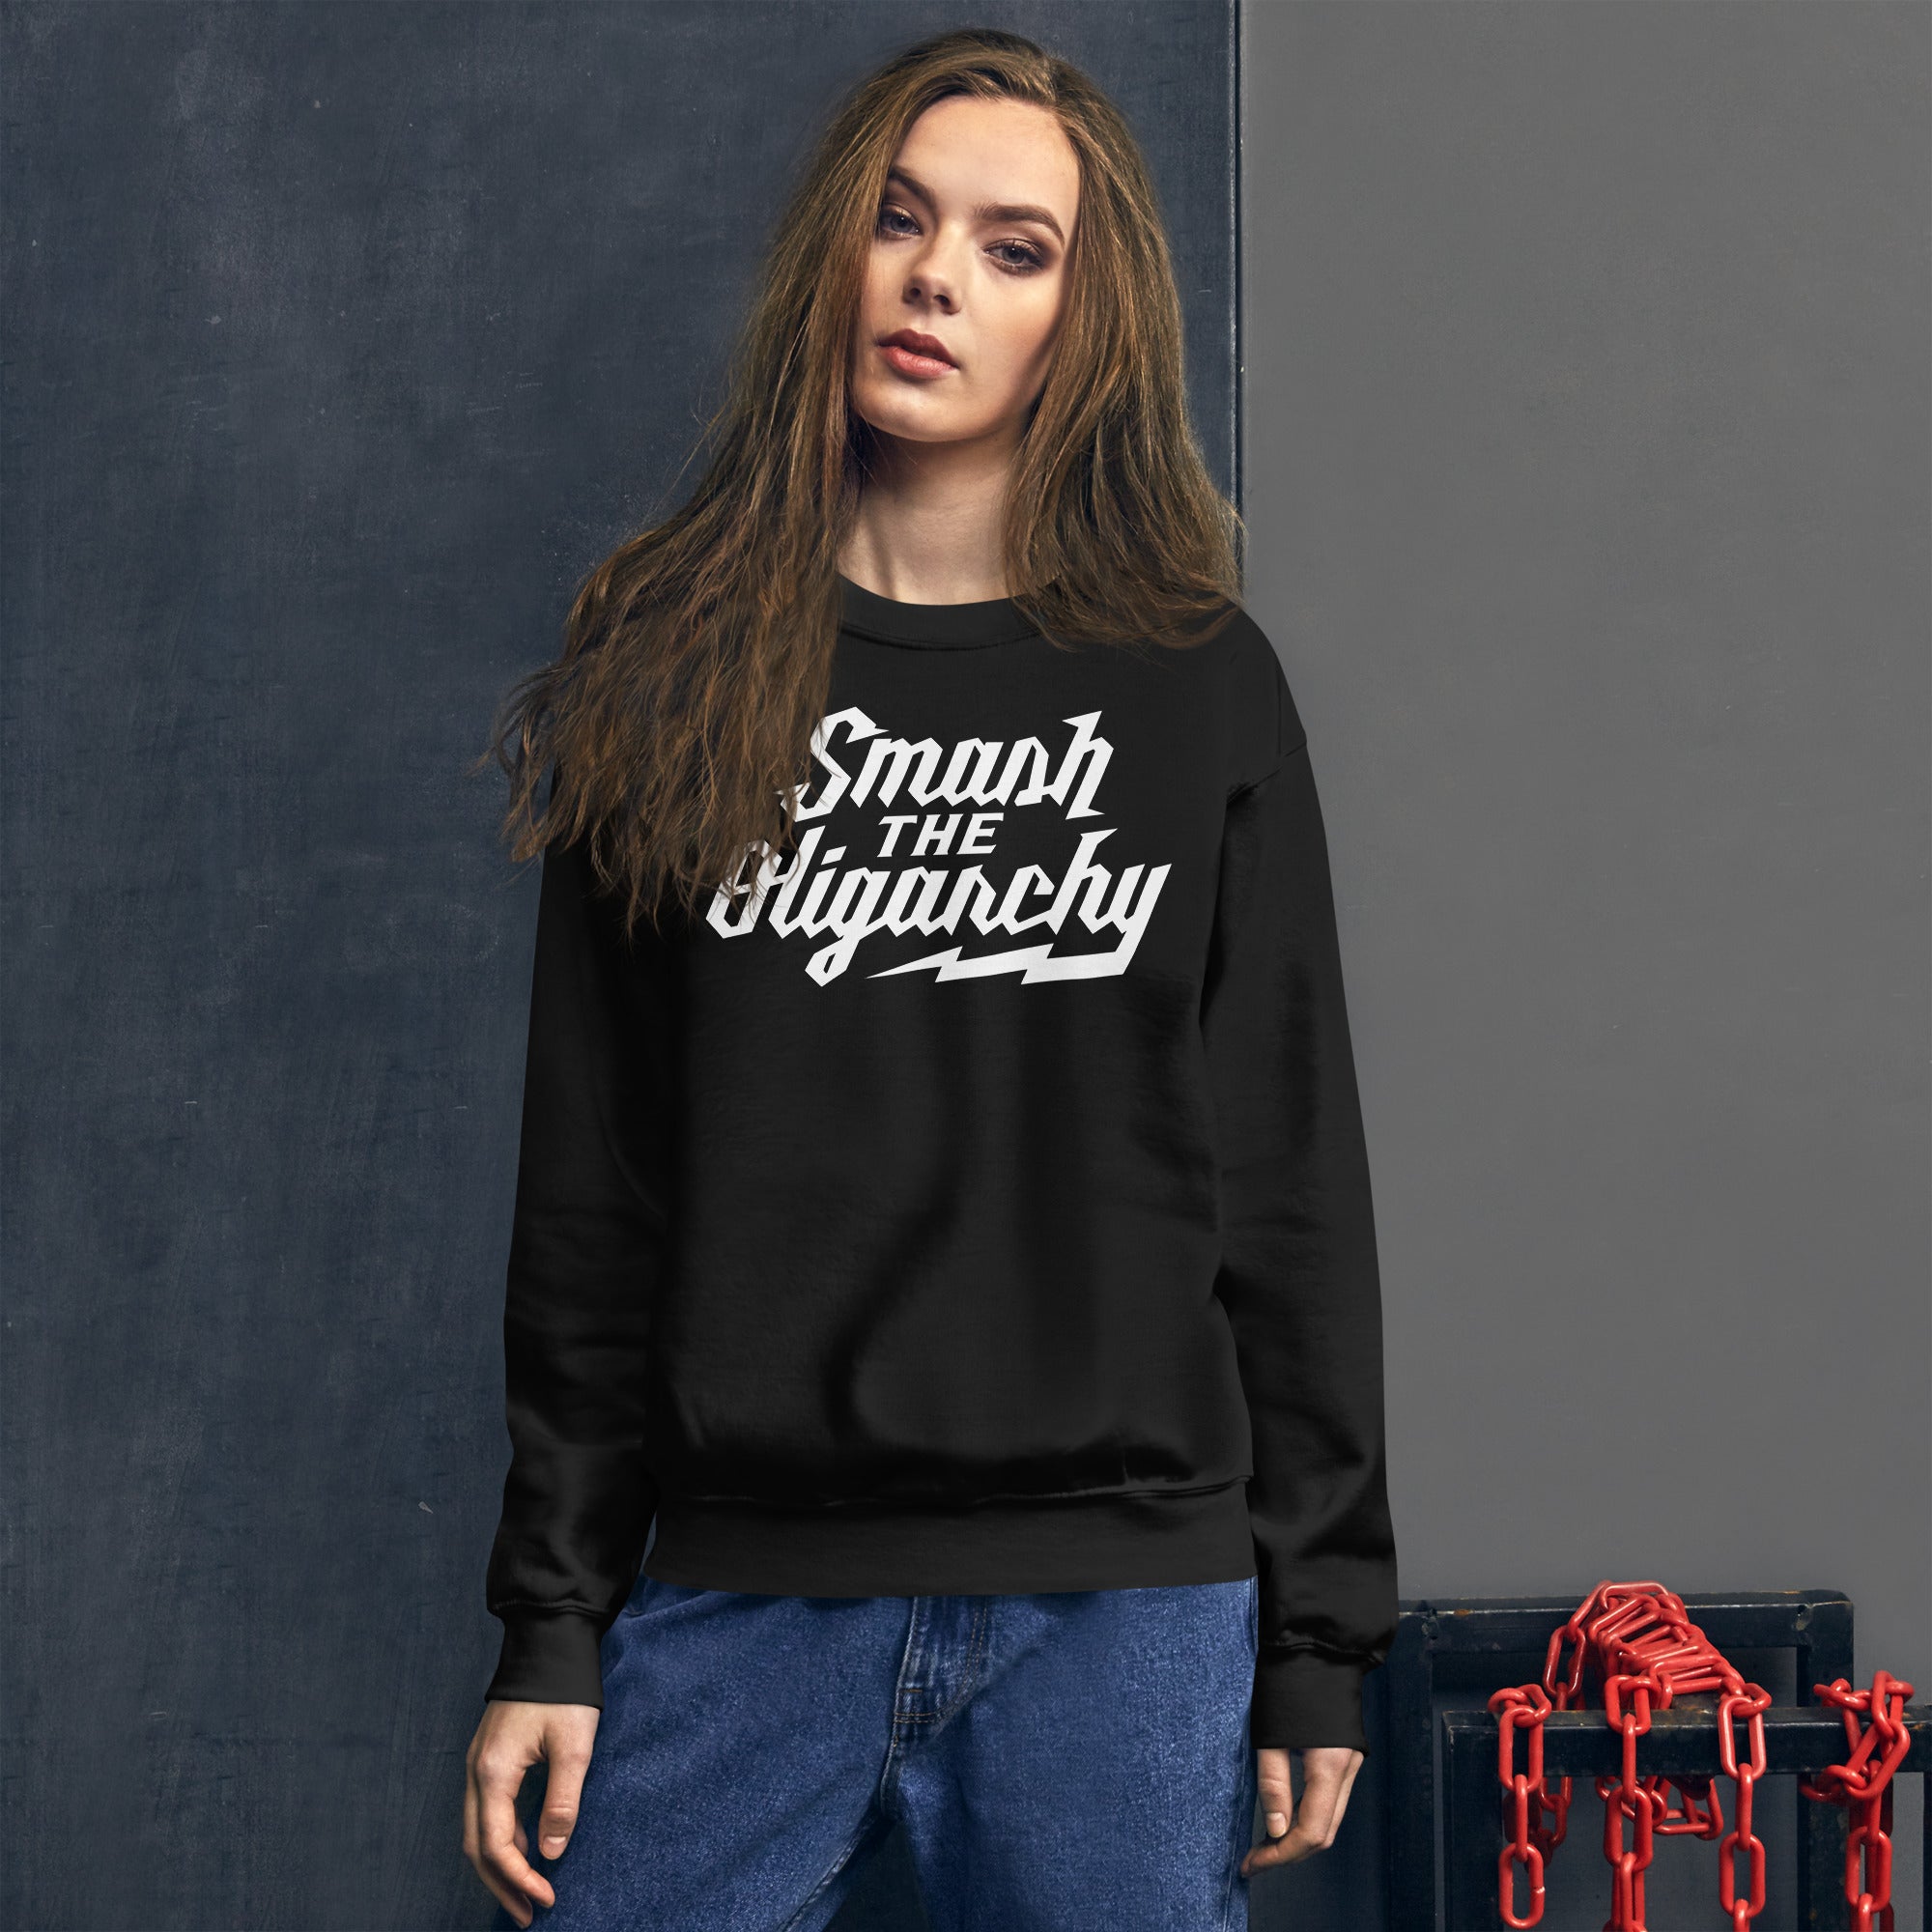 Smash the Oligarchy Crewneck Sweatshirt